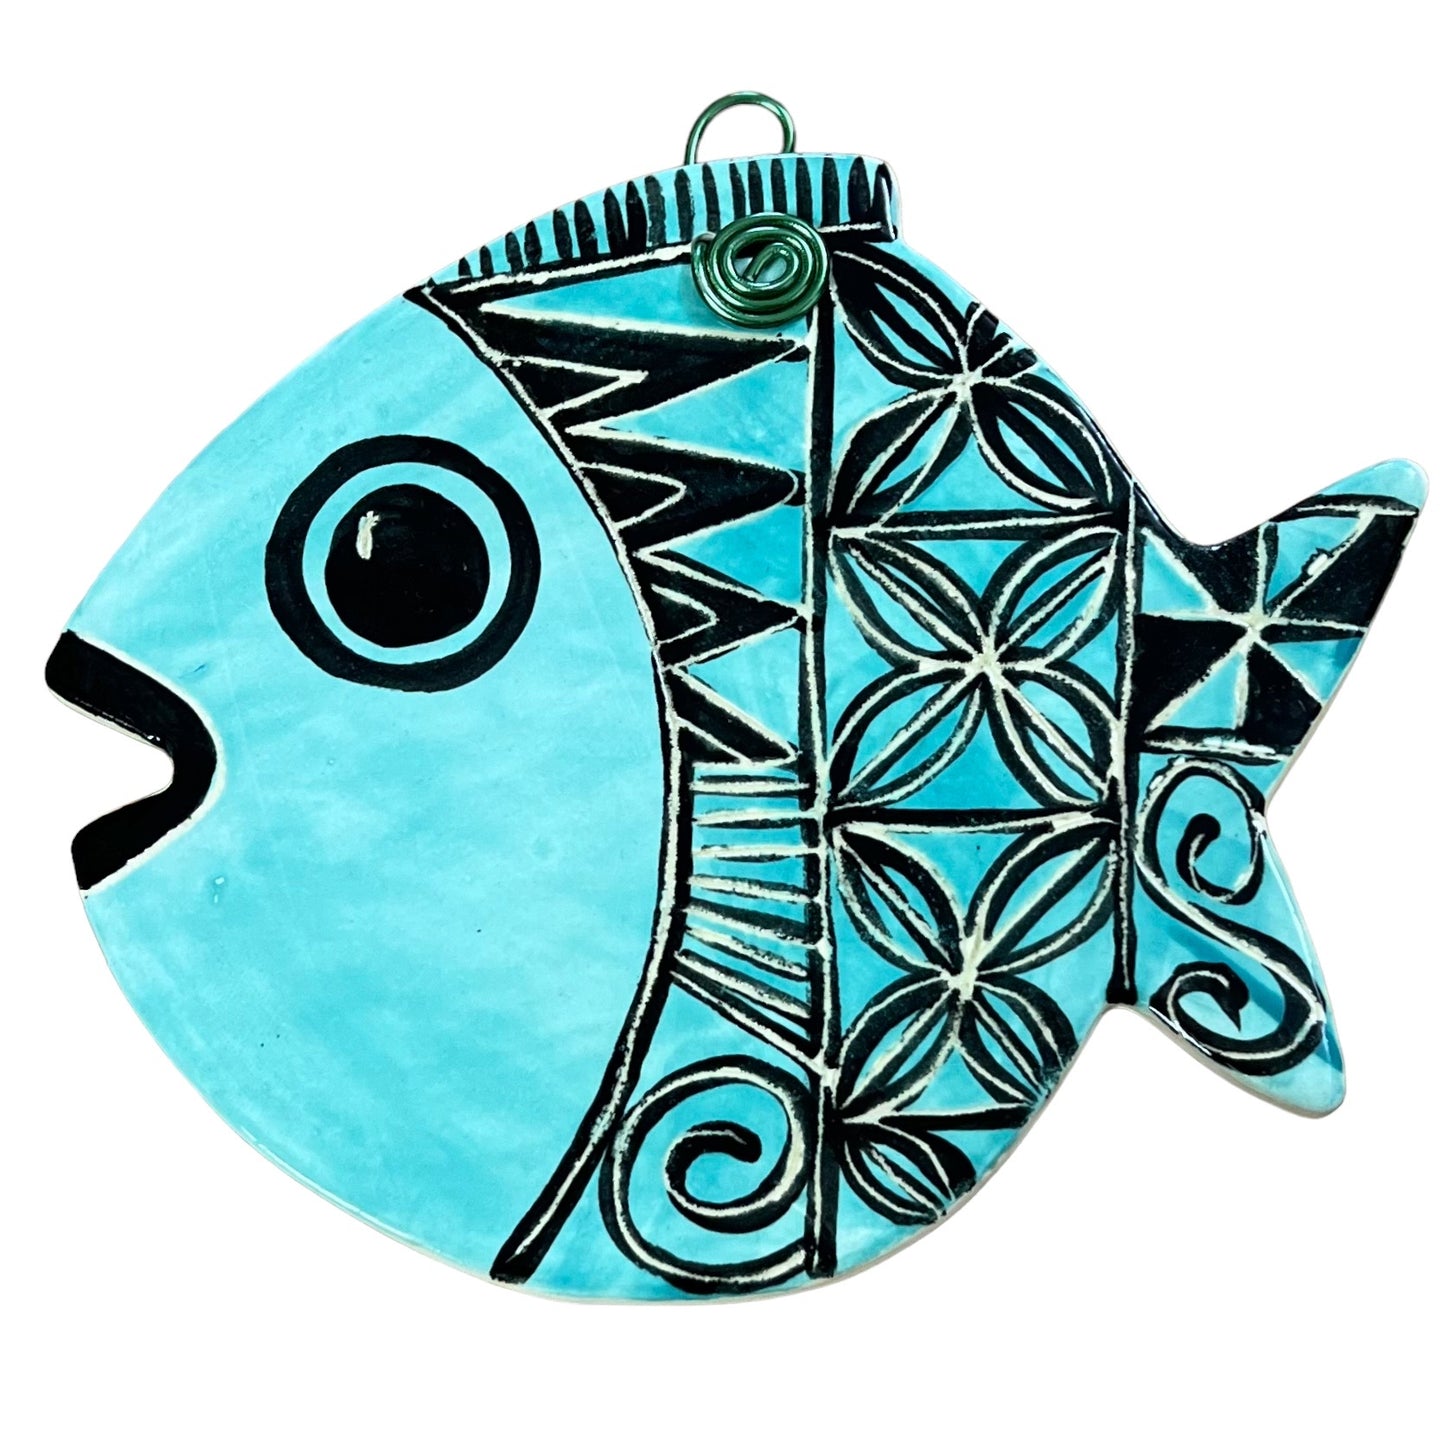 Fish ceramic wall decor